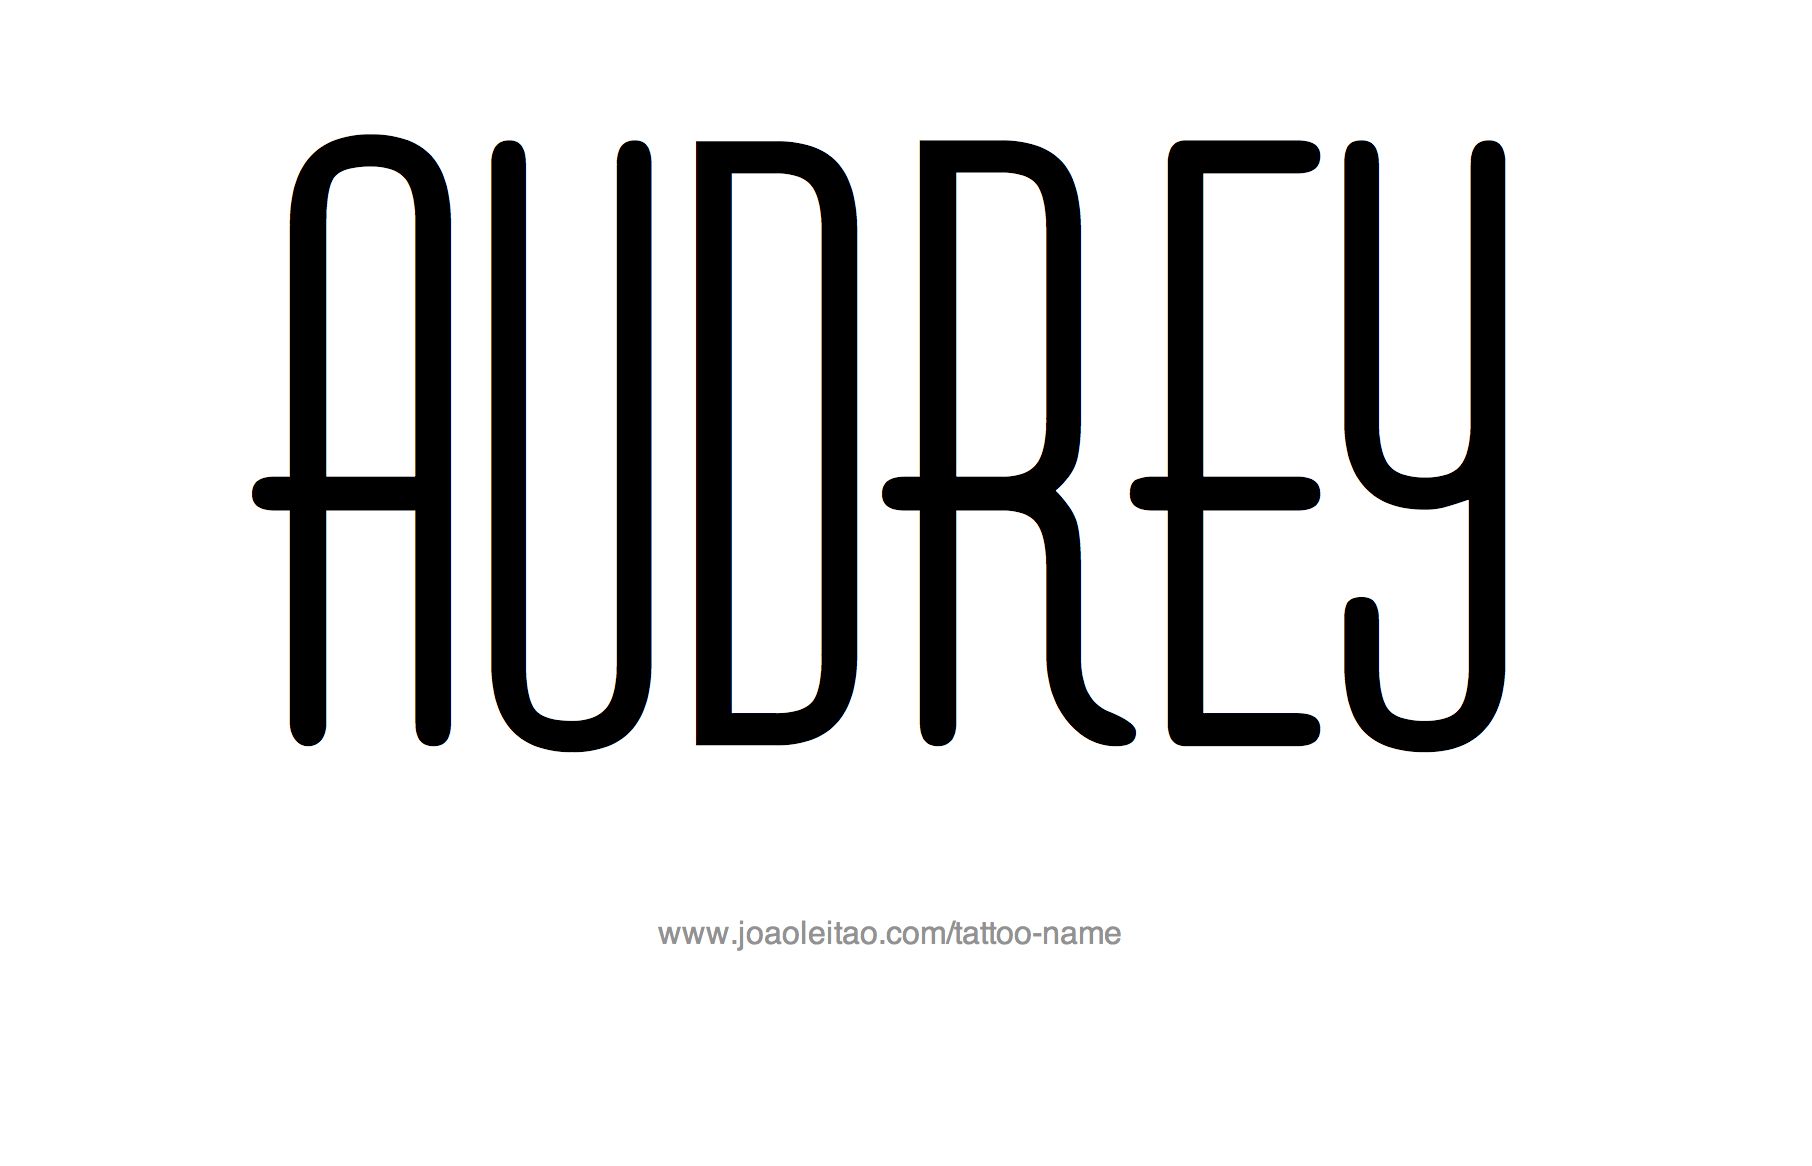 Tattoo Design Name Audrey 